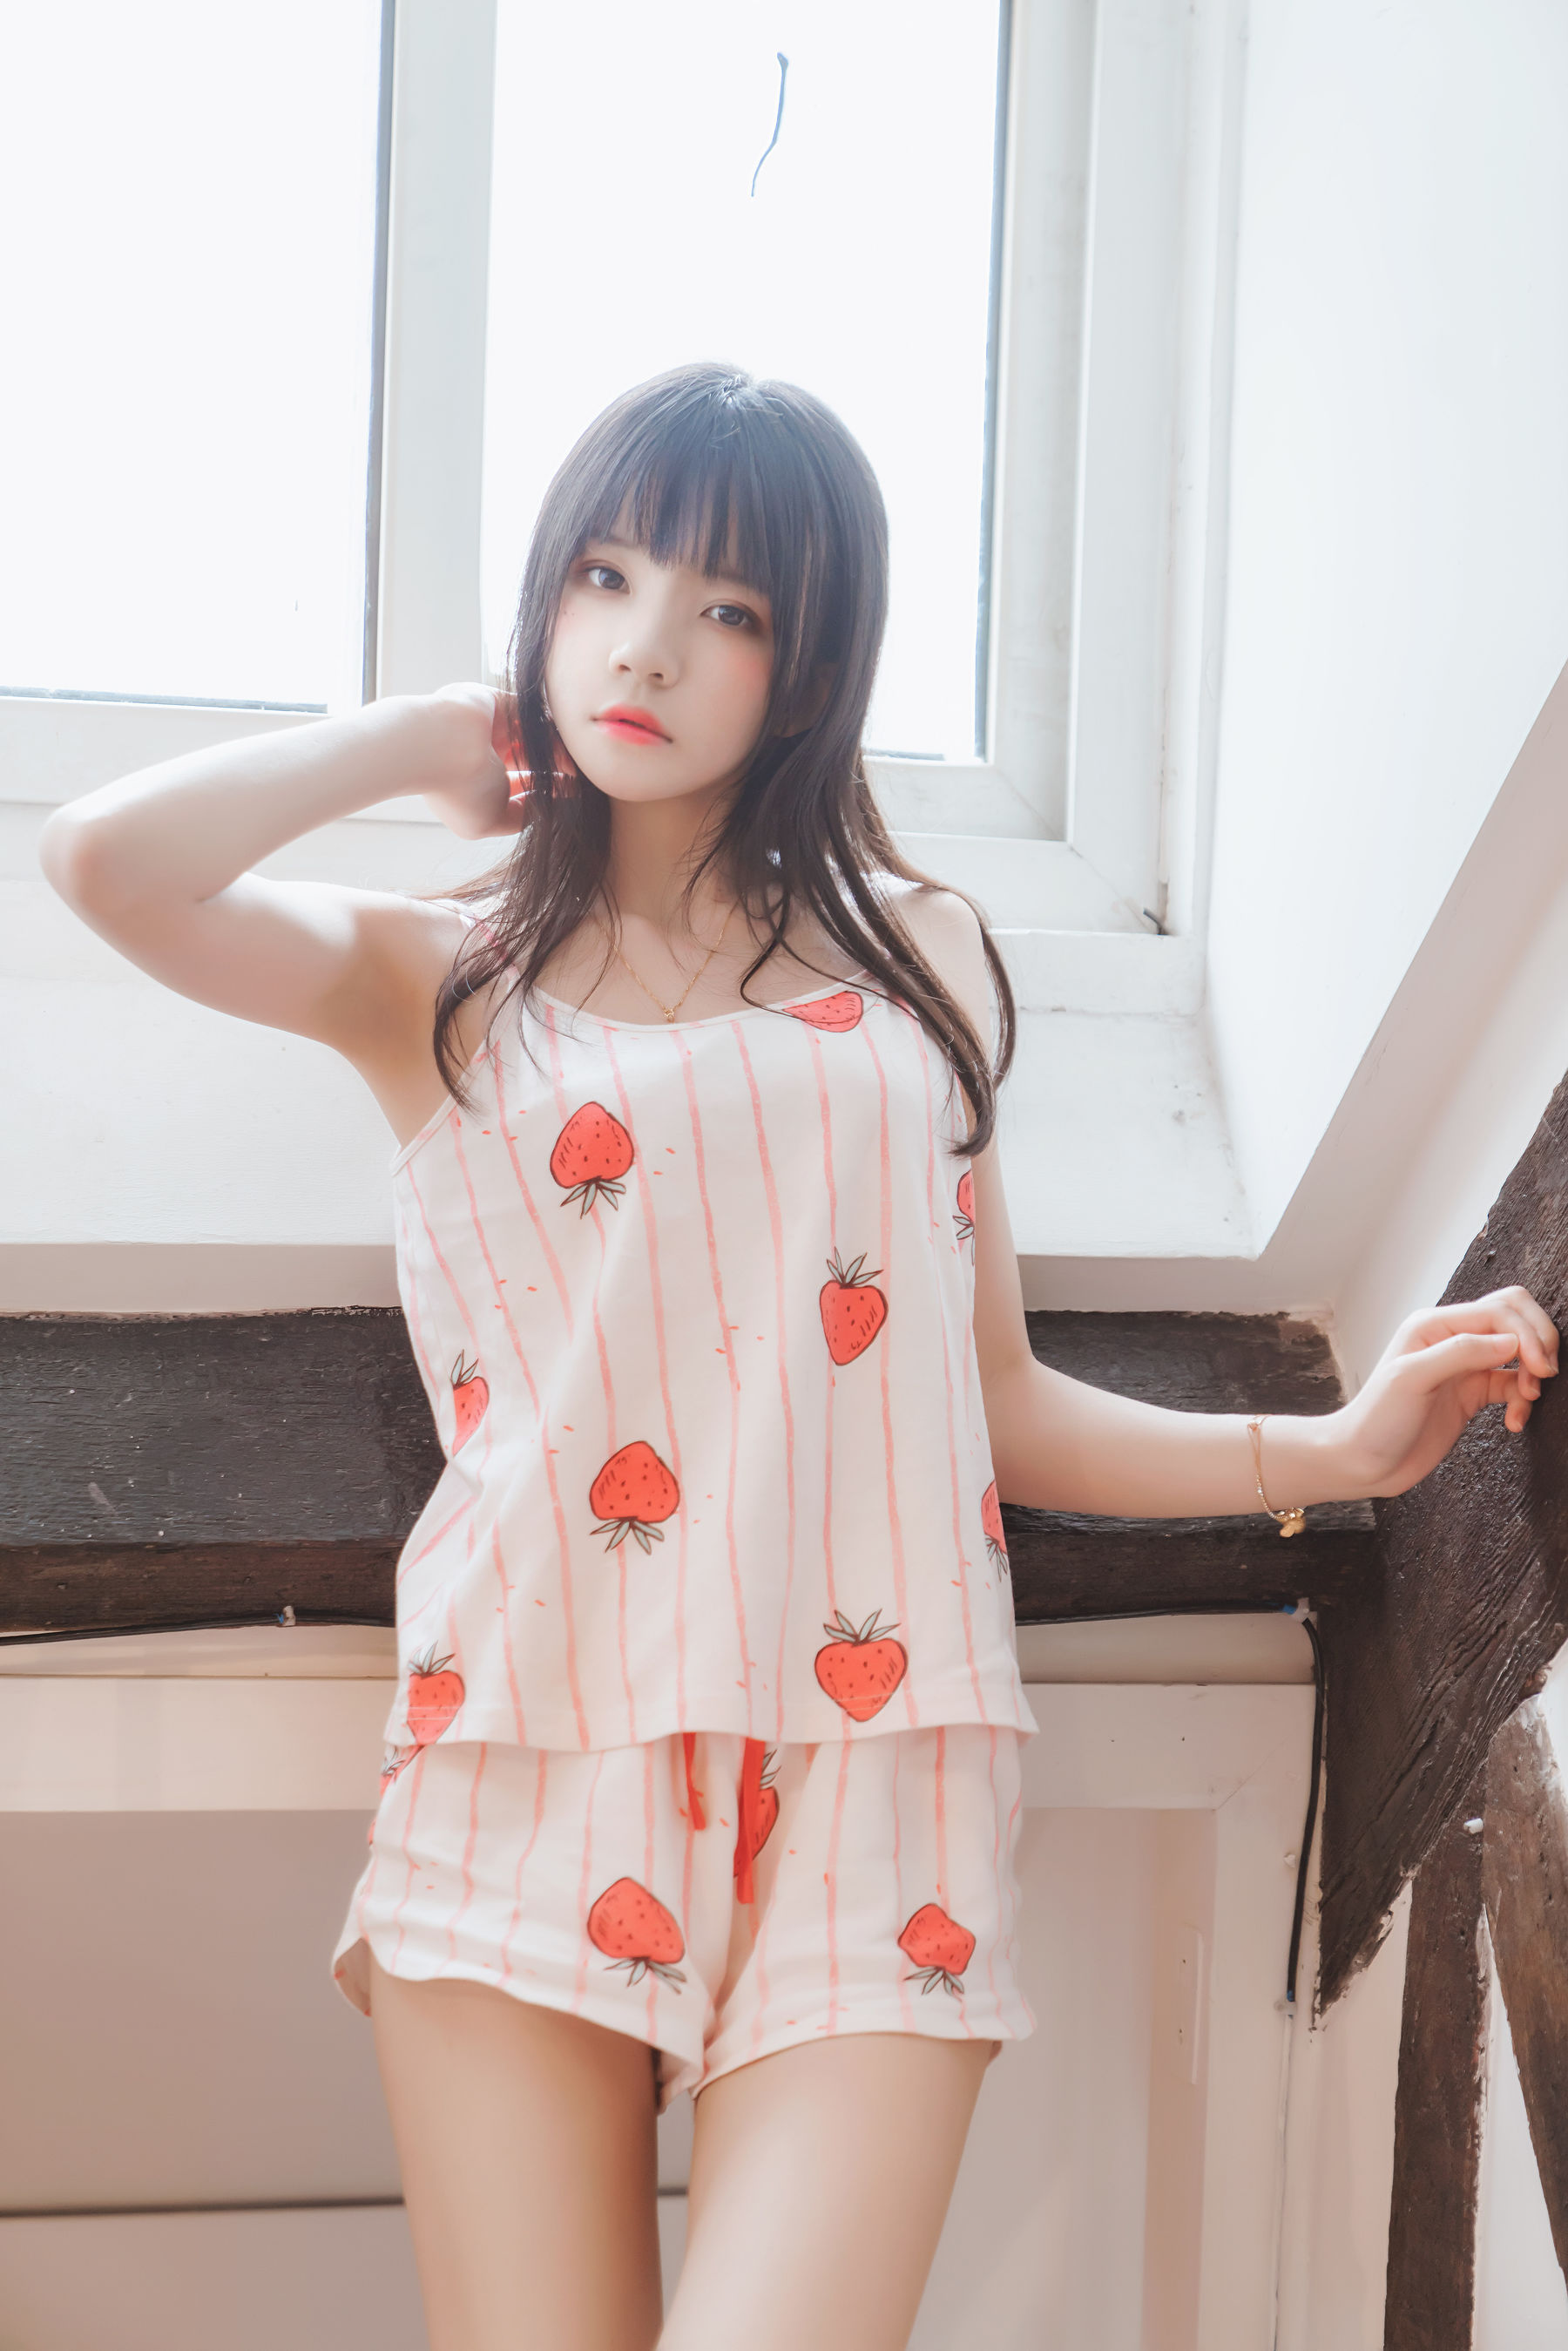 [COS福利] 桜桃喵 - 甜甜之唇边小草莓 写真套图12